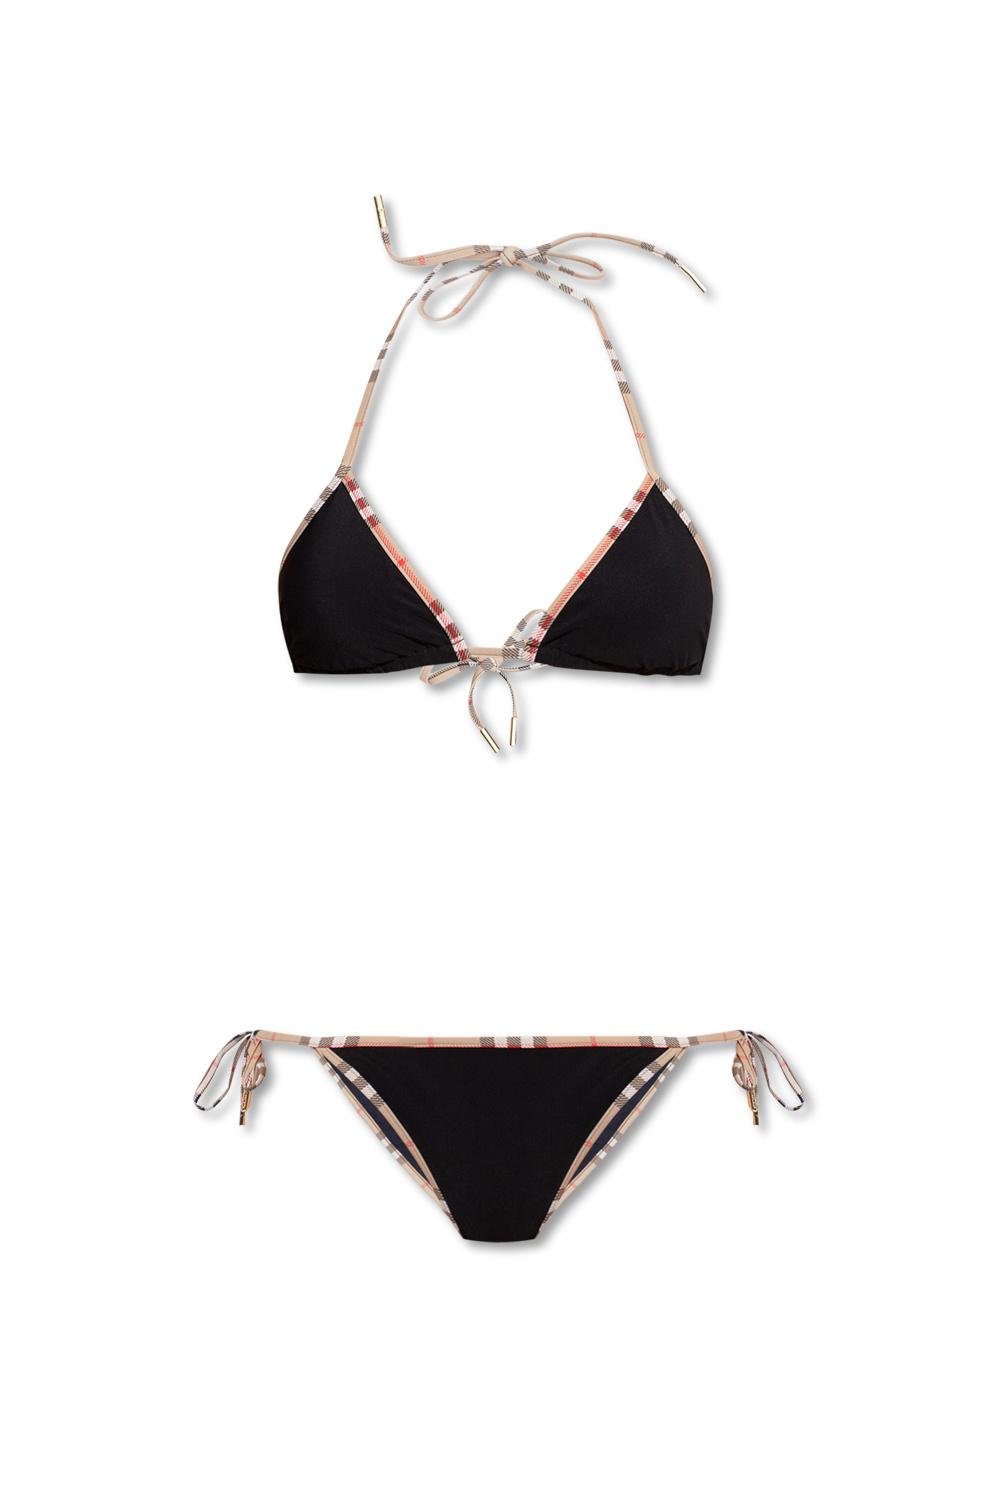 Burberry Vintage Check Detail Triangle Bikini in Black - Save 38% - Lyst